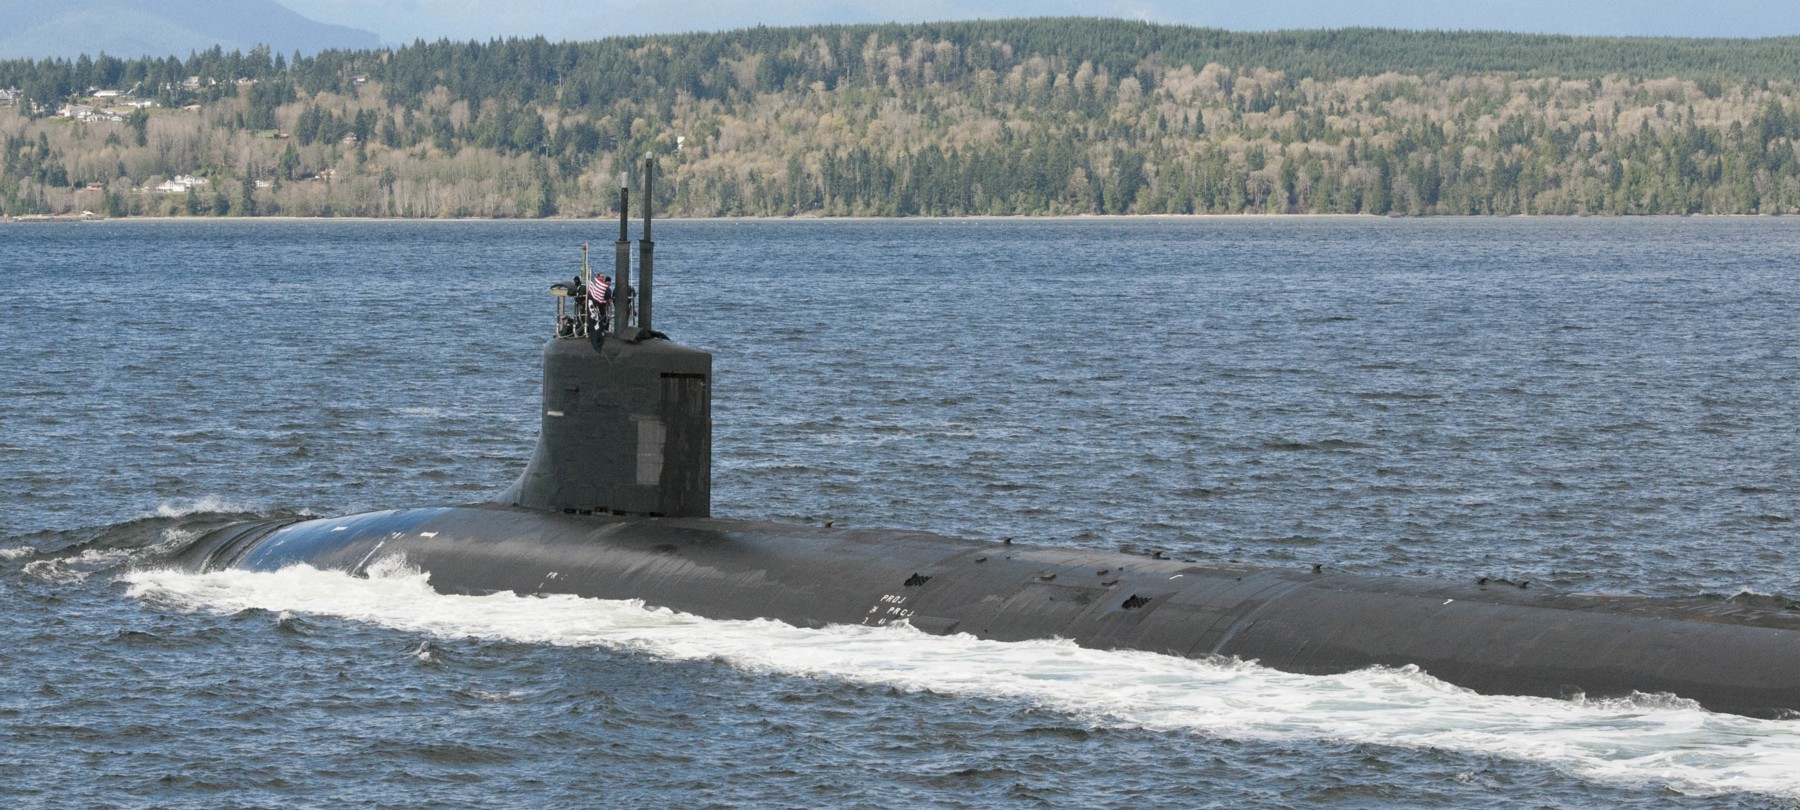 ssn-23 uss jimmy carter seawolf class attack submarine us navy returning naval base kitsap bremerton washington 31